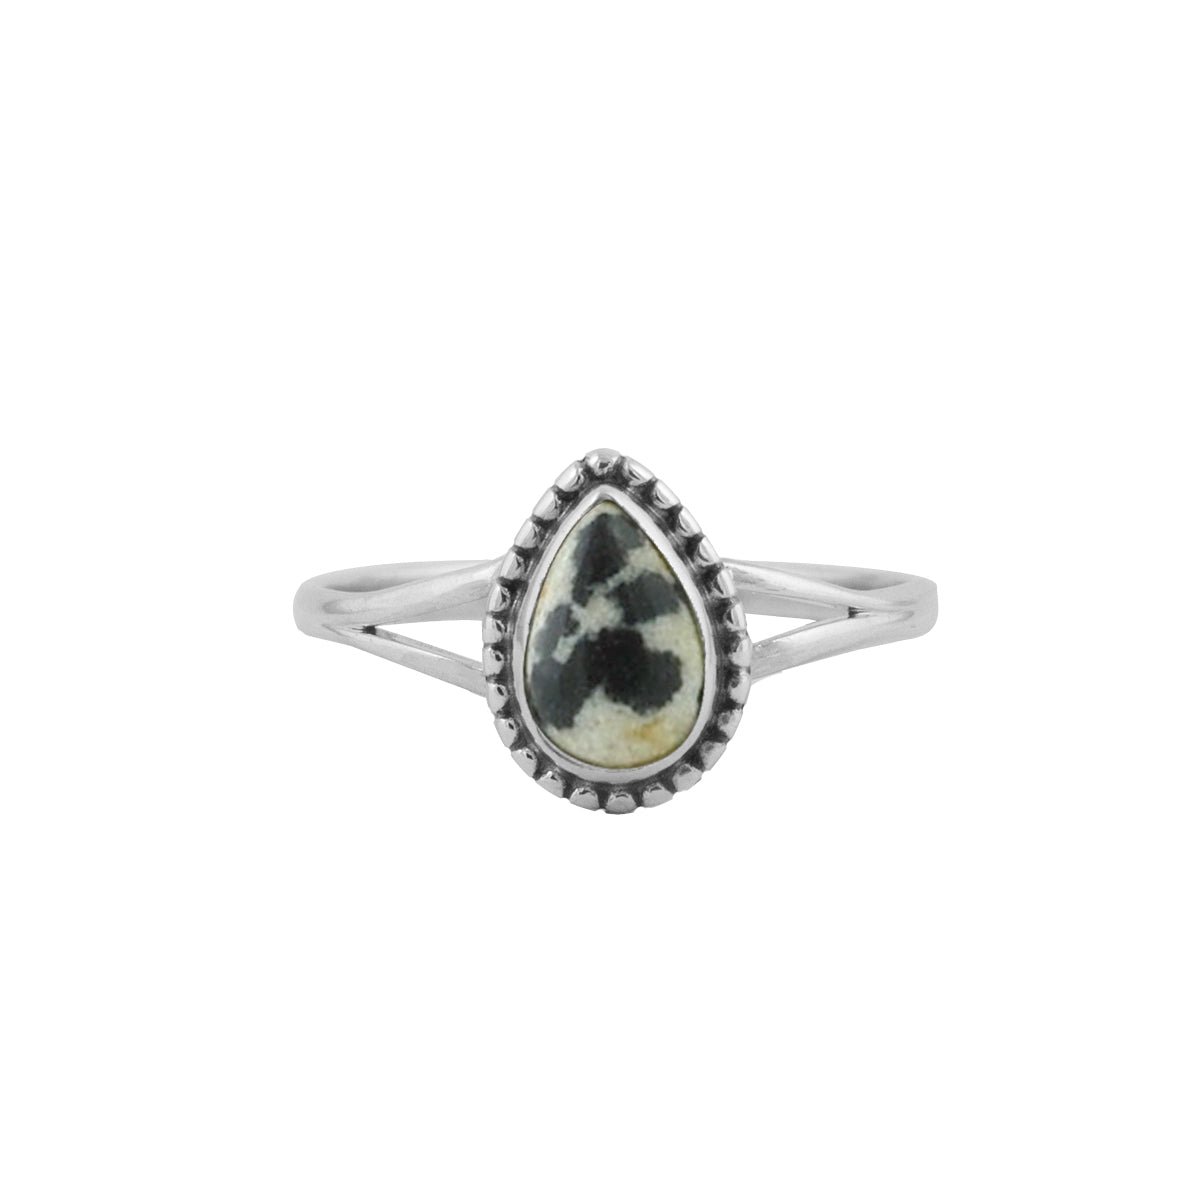 Jewelryz | Licia | Ring 925 zilver met dalmatiër jaspis | 17.00 mm / maat 53